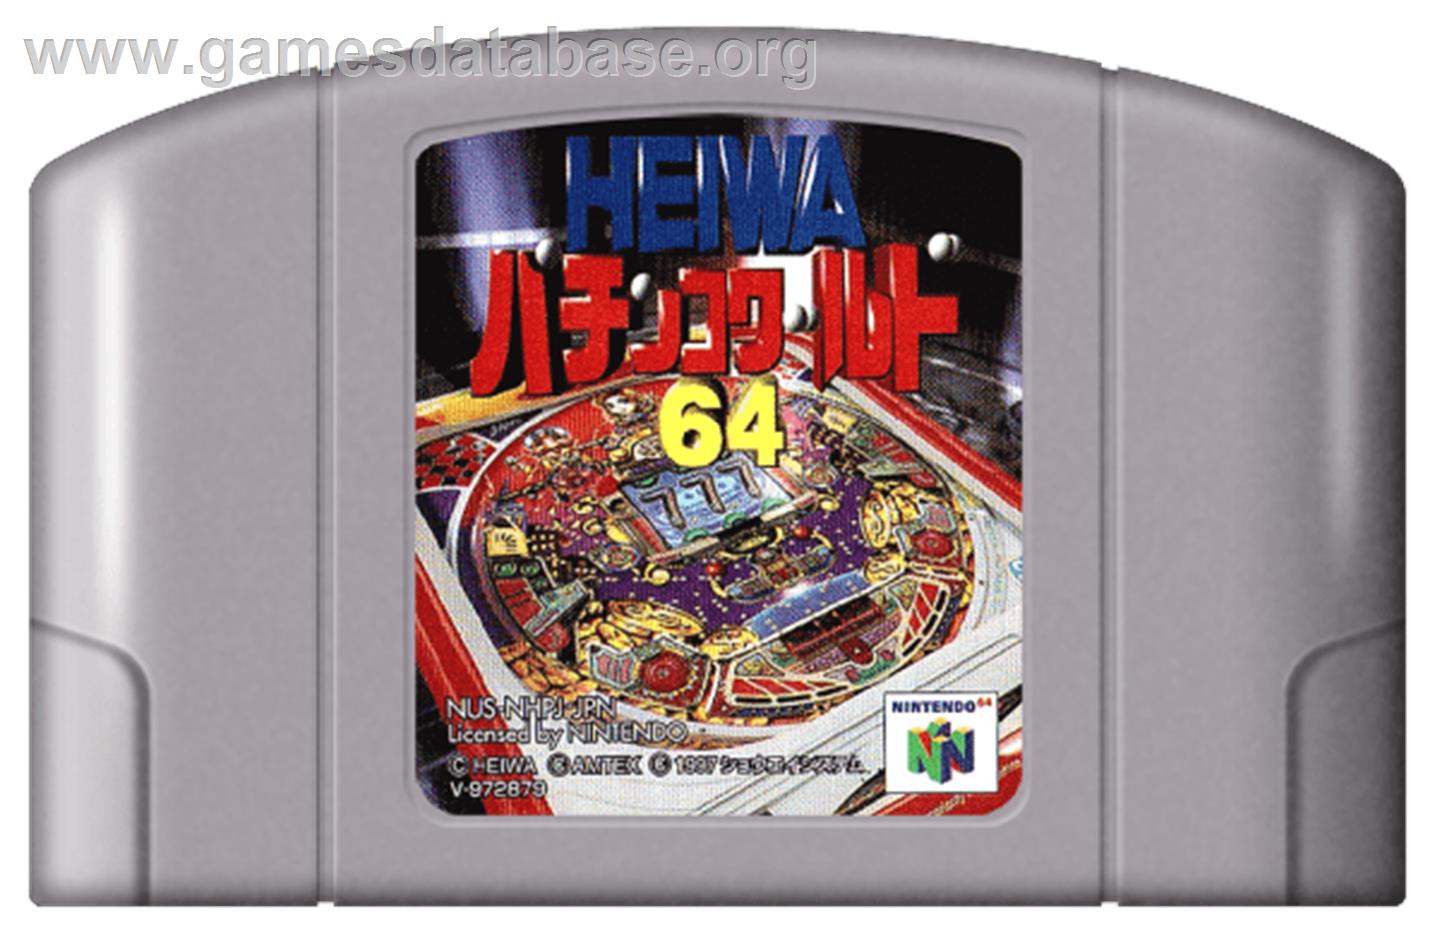 Heiwa Pachinko World 64 - Nintendo N64 - Artwork - Cartridge